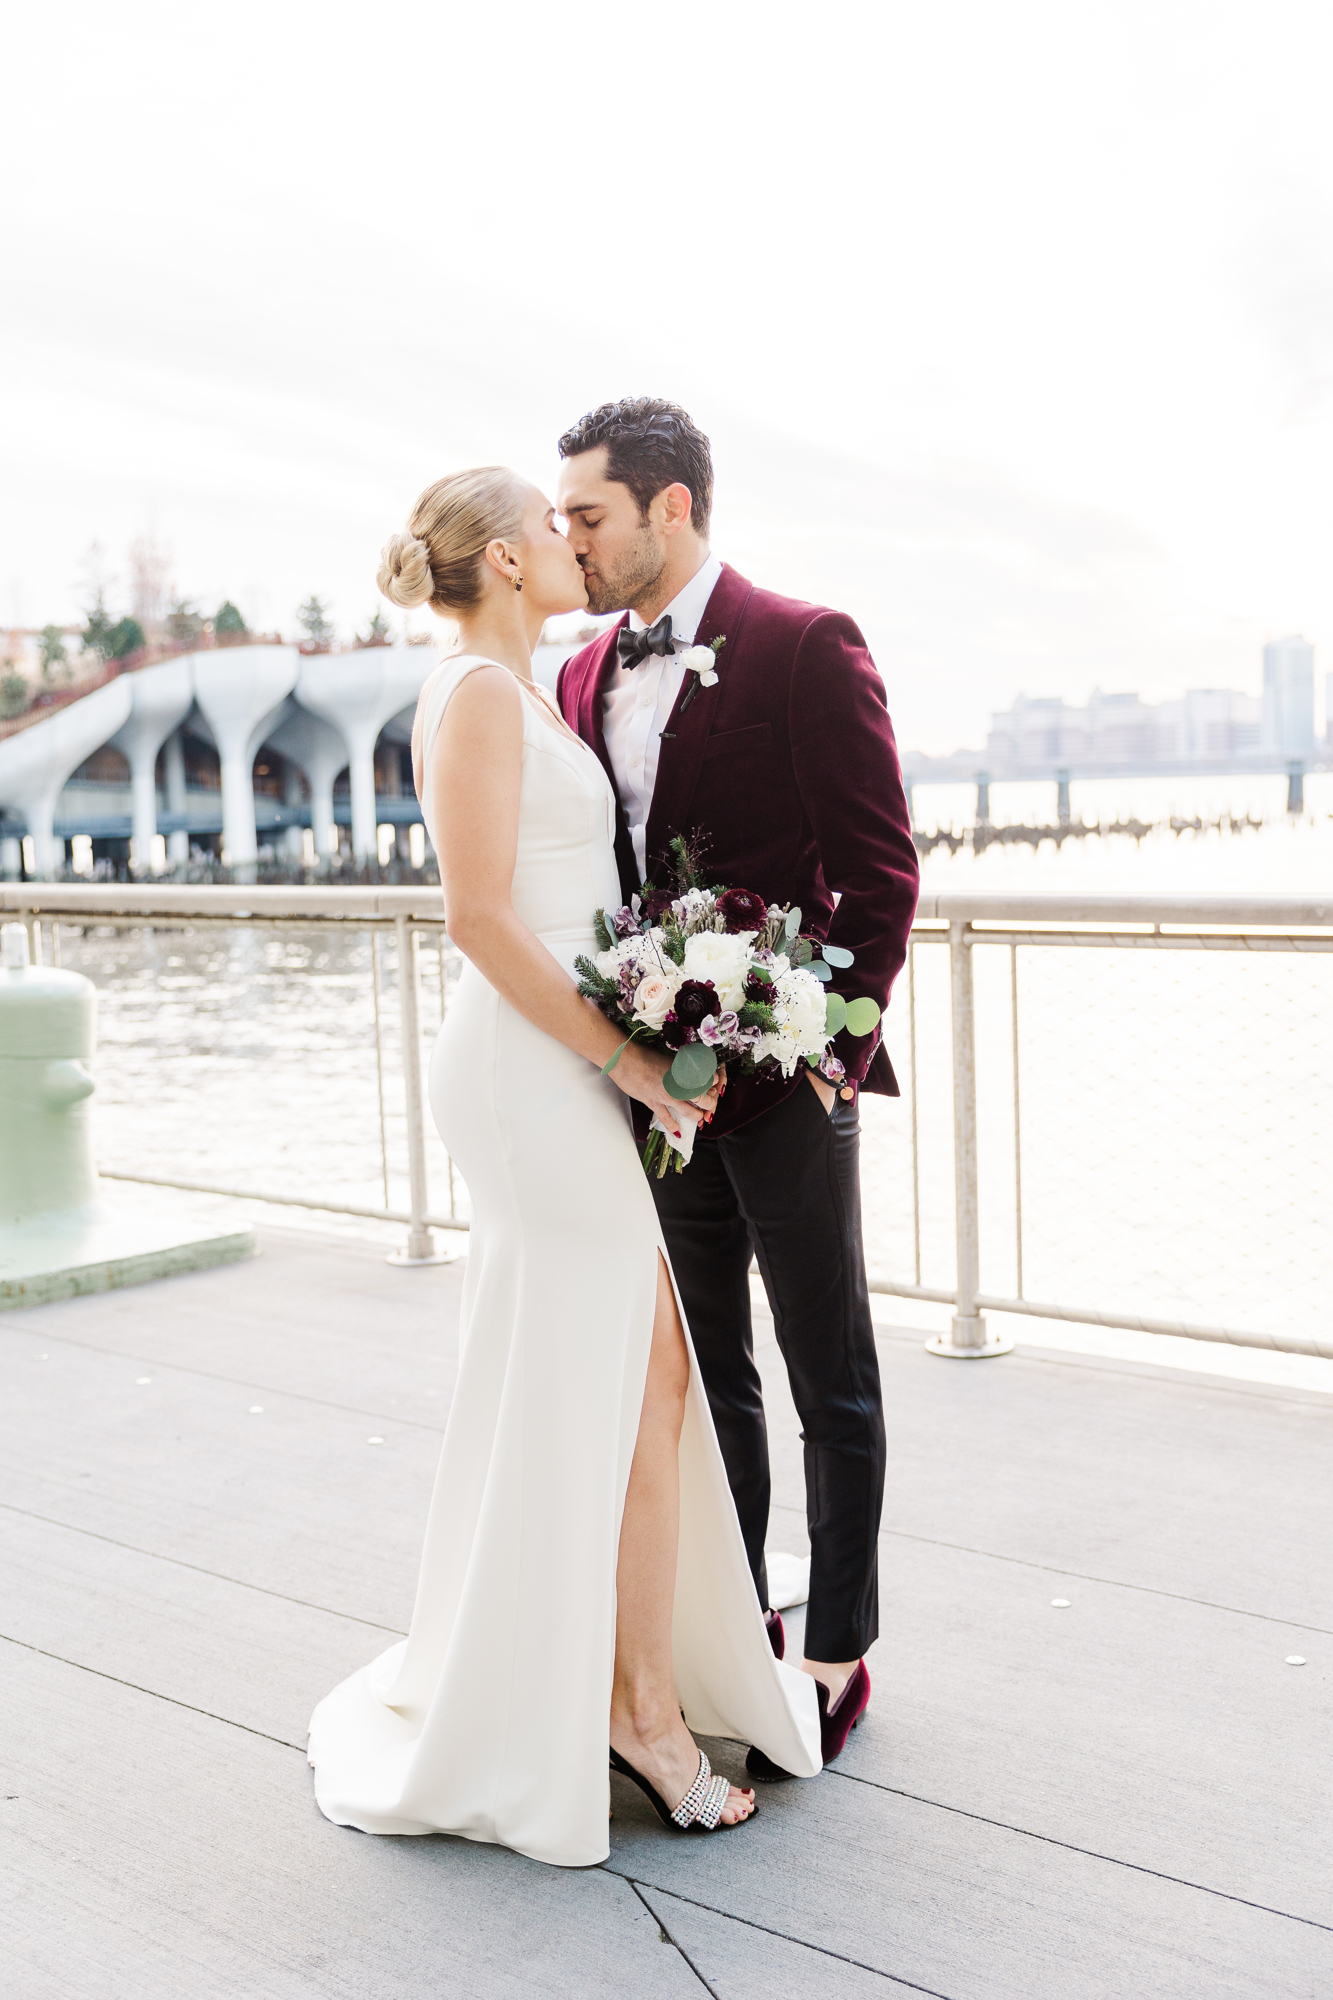 Stunning New York Wedding Photography at City Winery